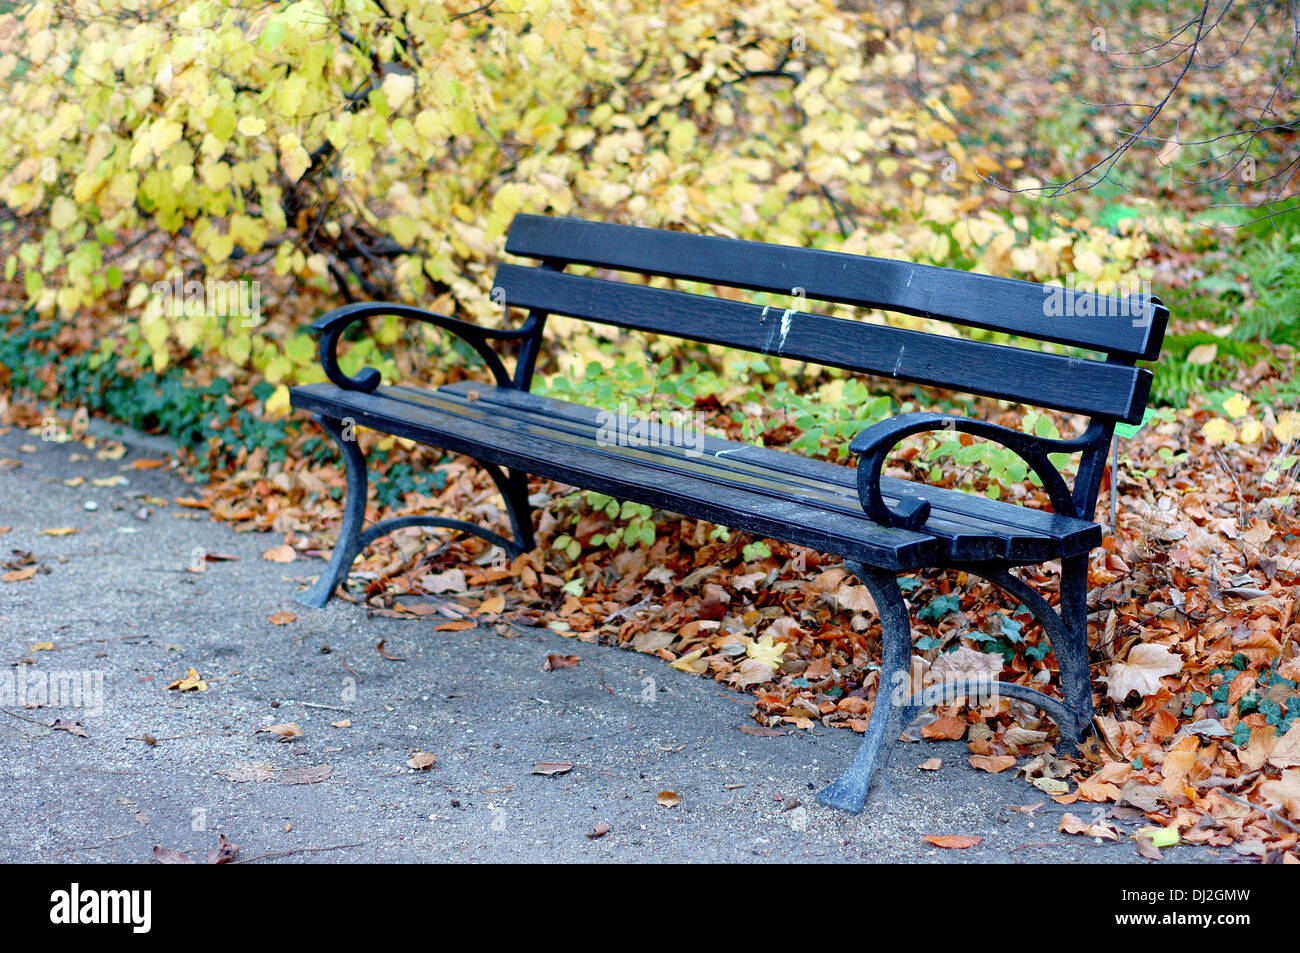 Banco del parque otoño empiness solitaria soledad nostalgia nostalgia Foto de stock